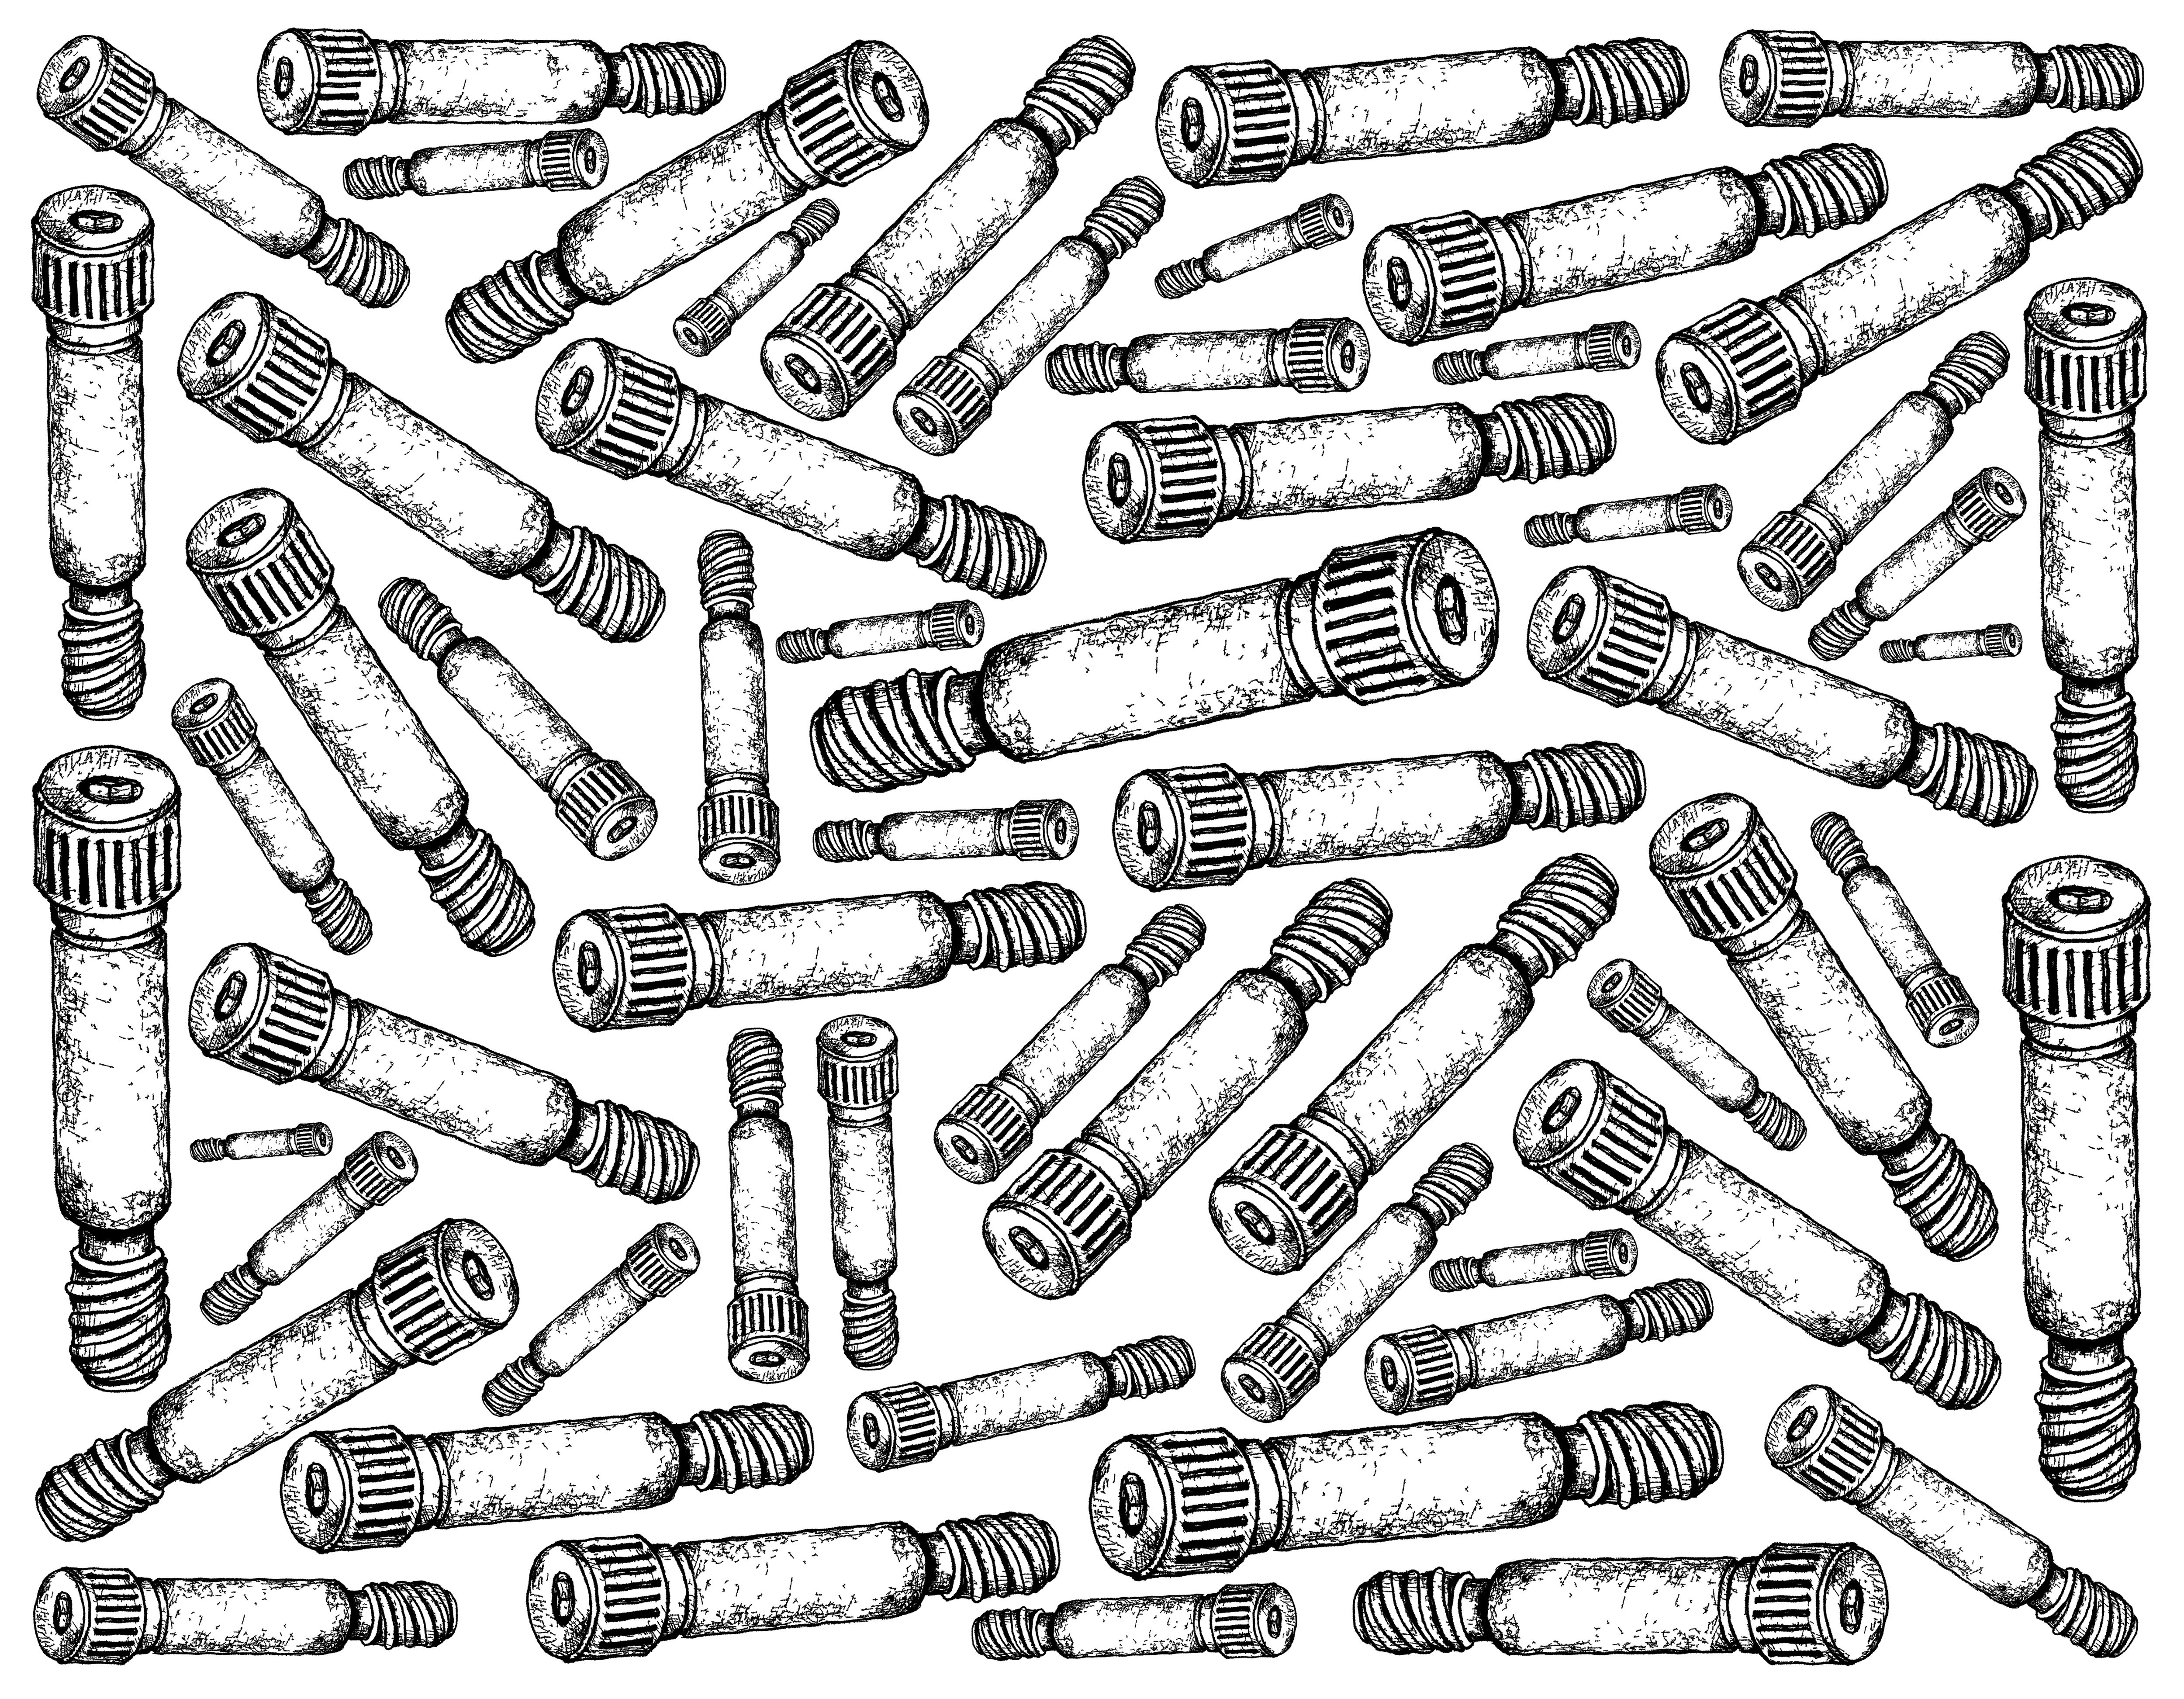 A hand drawn sketch of shoulder screws. Source: Adobe/lamnee